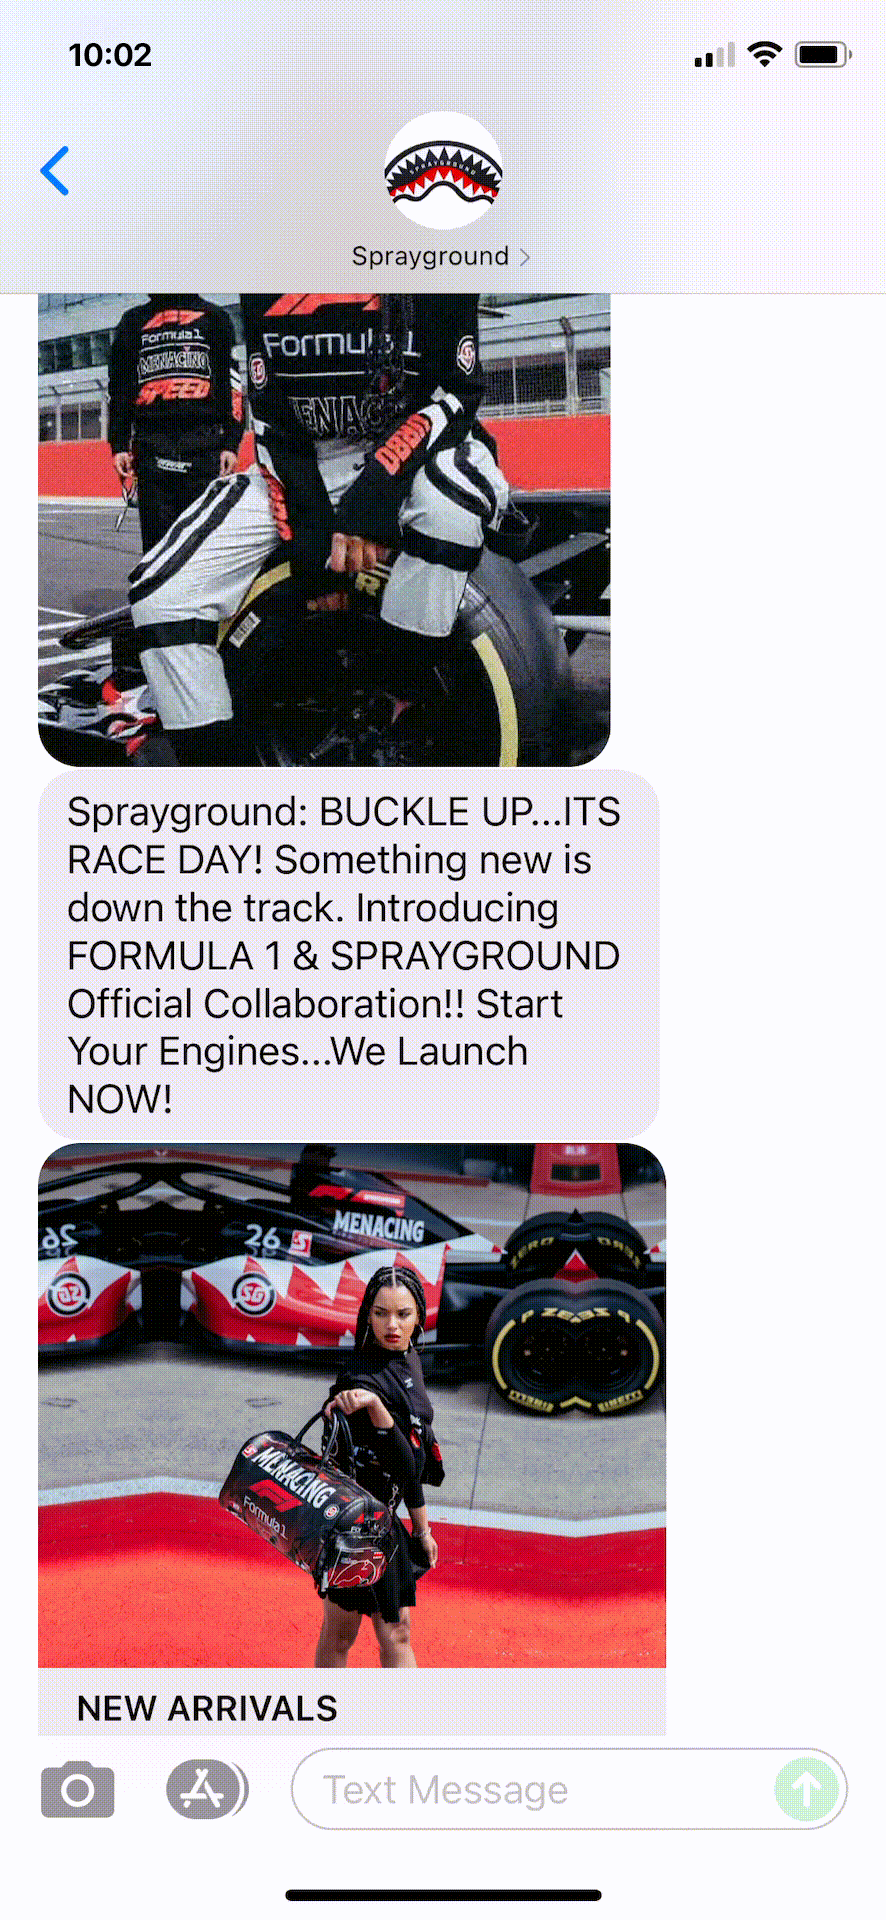 Sprayground-Text-Message-Marketing-Example-08.22.2021